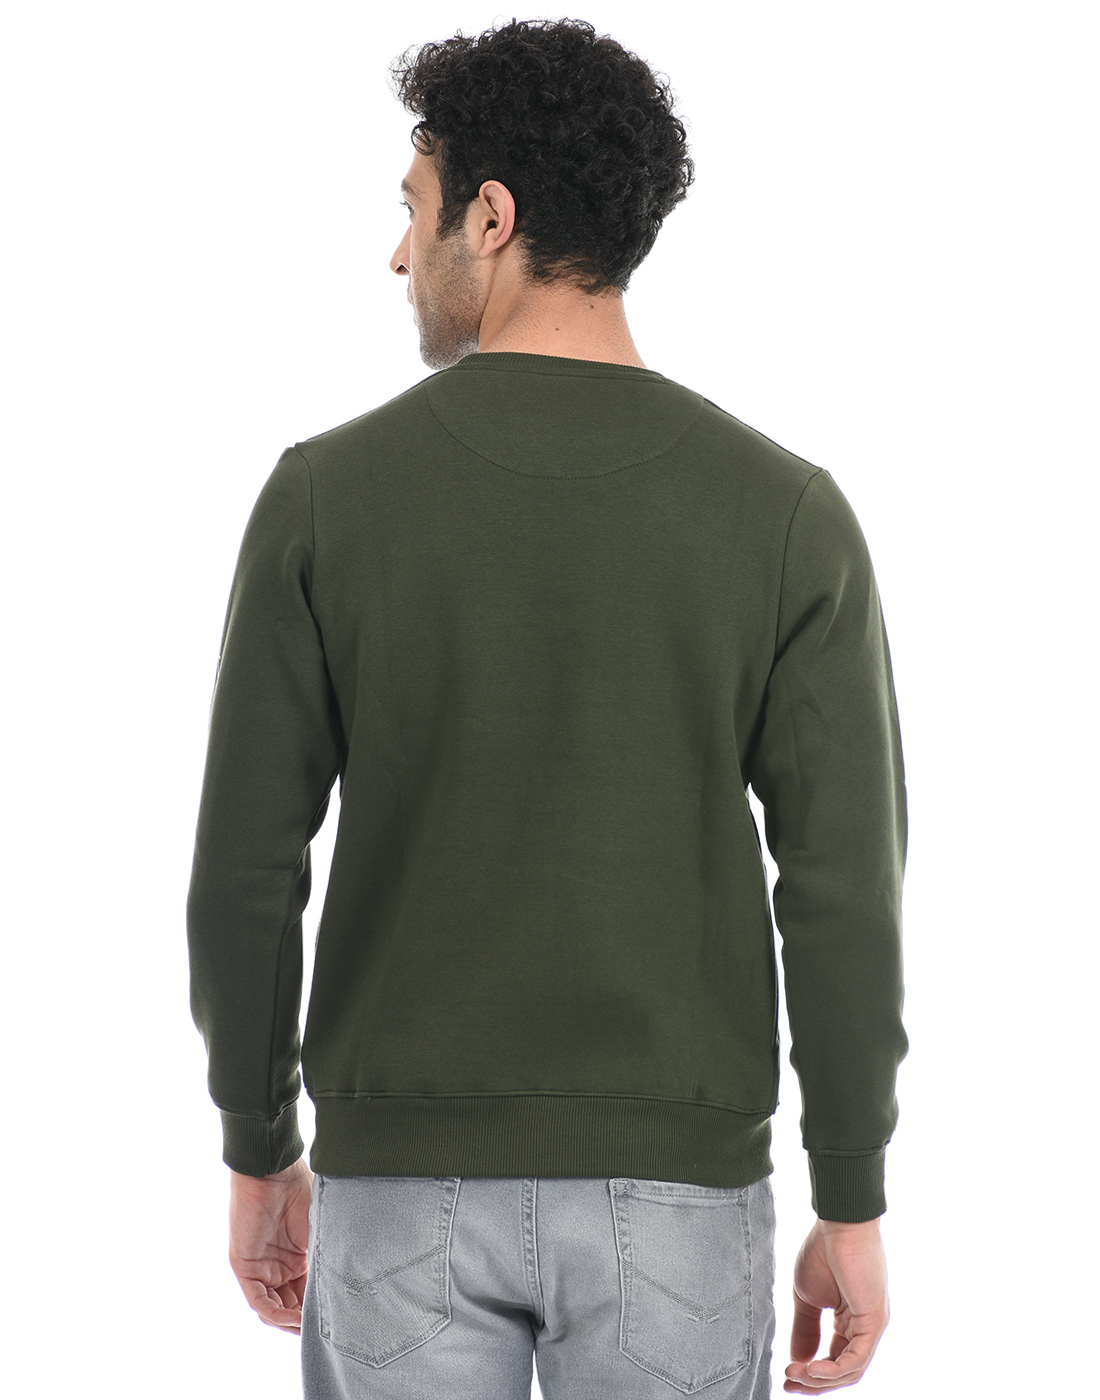 Cloak & Decker by Monte Carlo Men Printed Green Sweatshirt